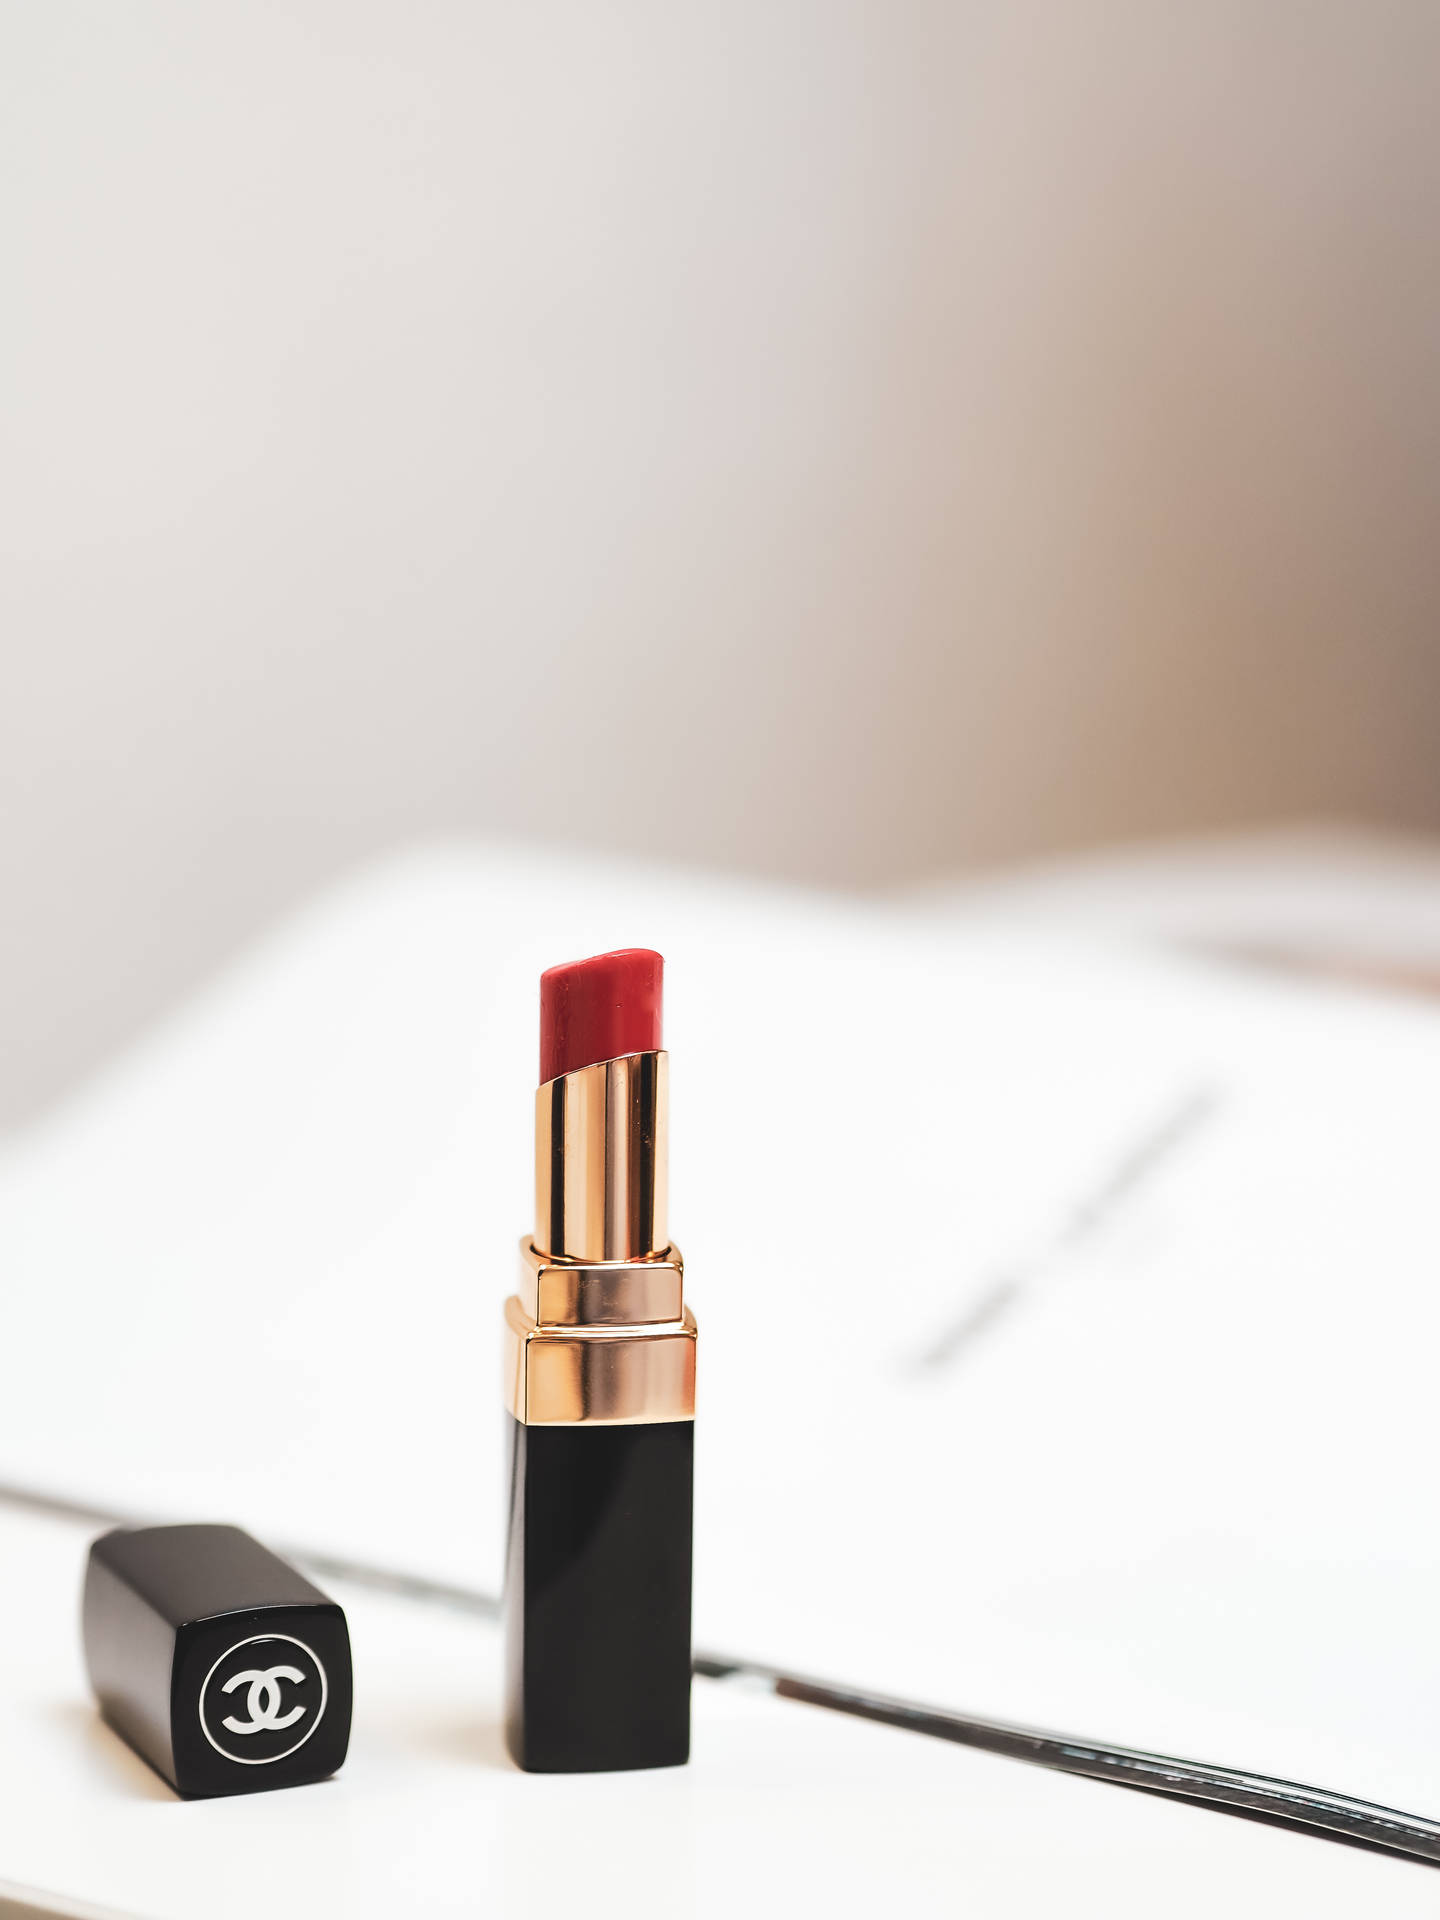 Chanel Lipstick Close-up